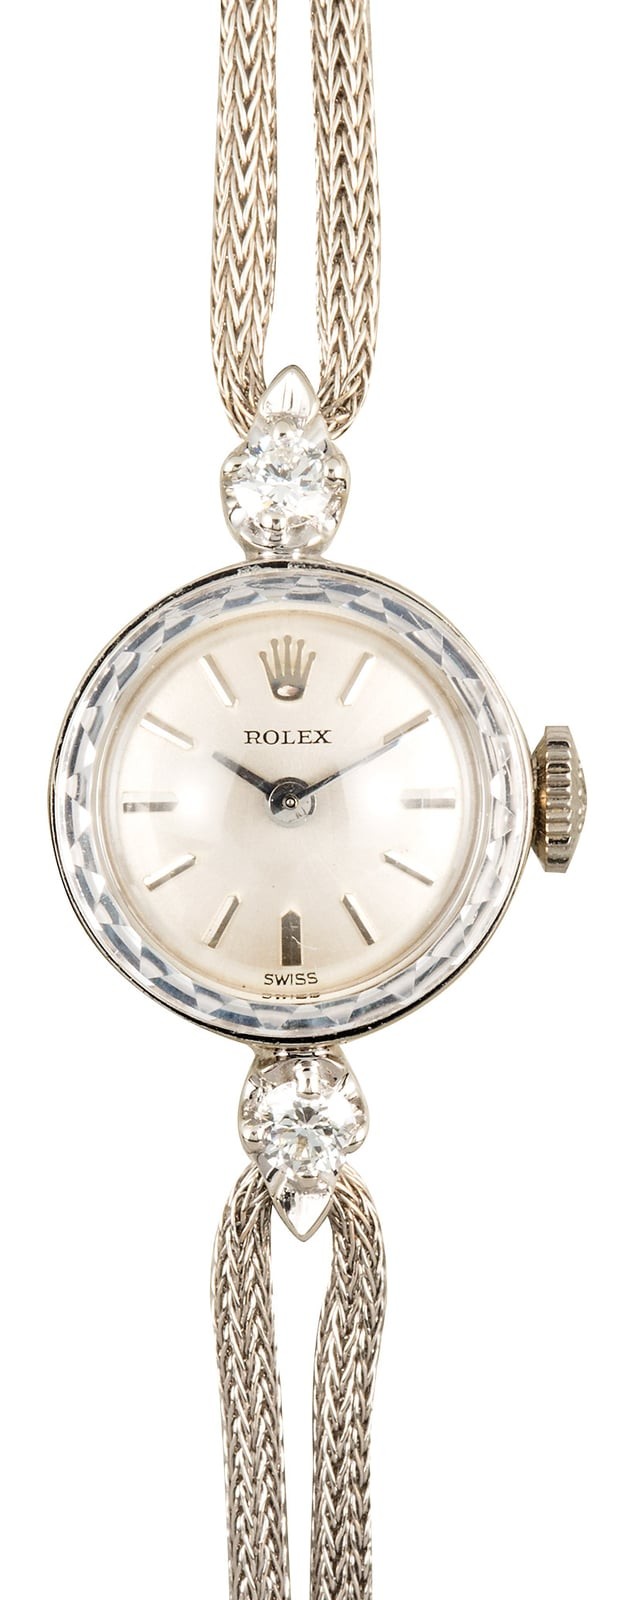 Copy Rolex Ladies Diamond Cocktail Watch WE01517